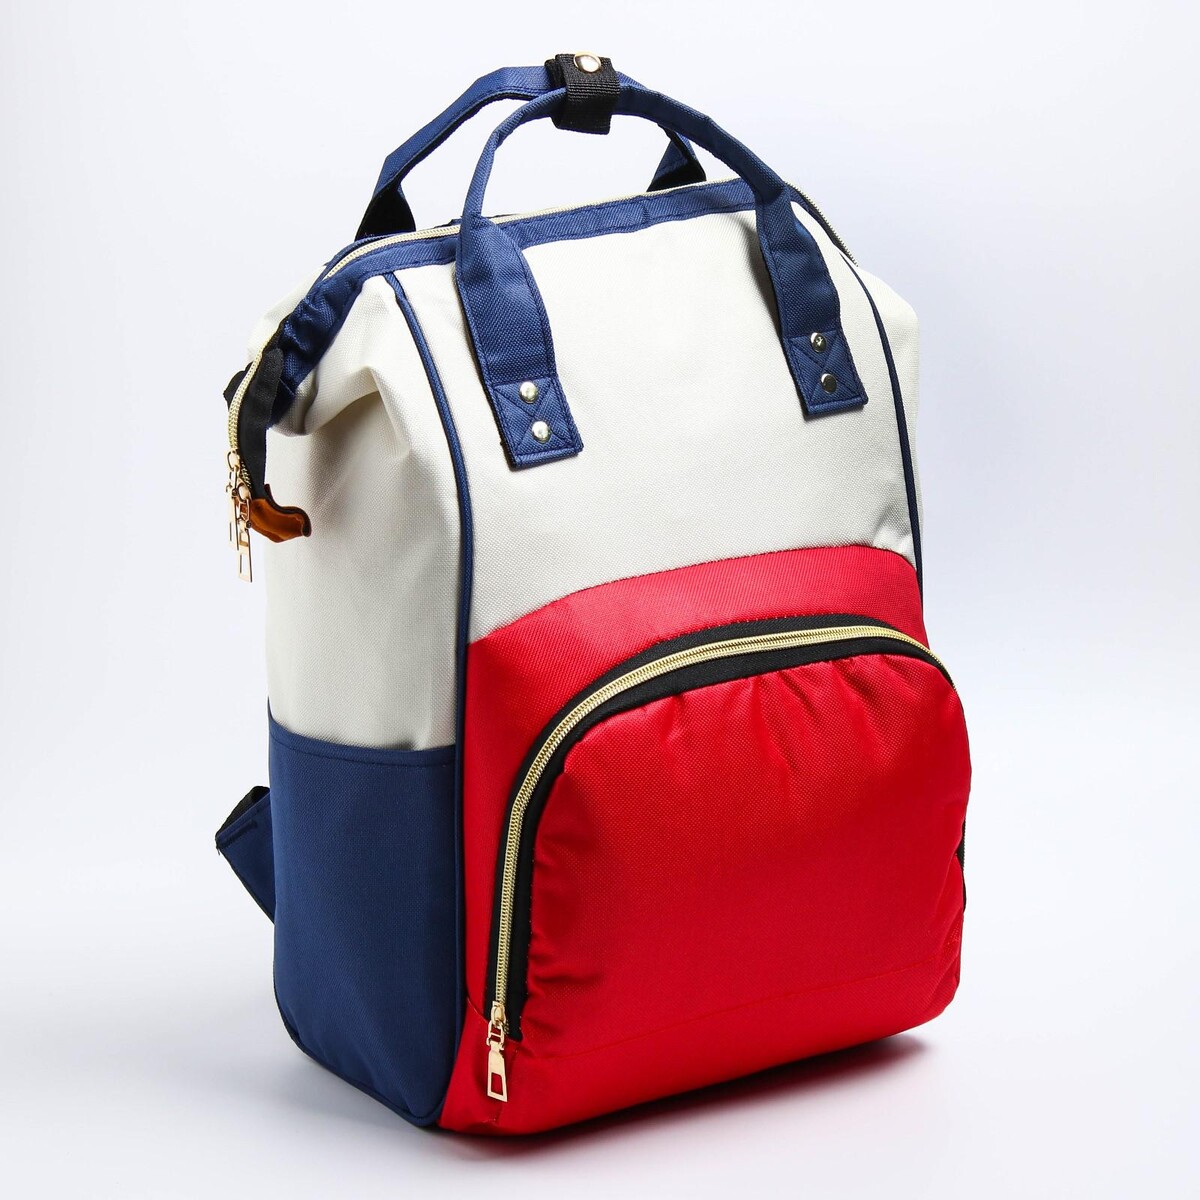 Рюкзак женский с термокарманом, термосумка - портфель, цвет красный рюкзак женский с термокарманом термосумка портфель серый синий